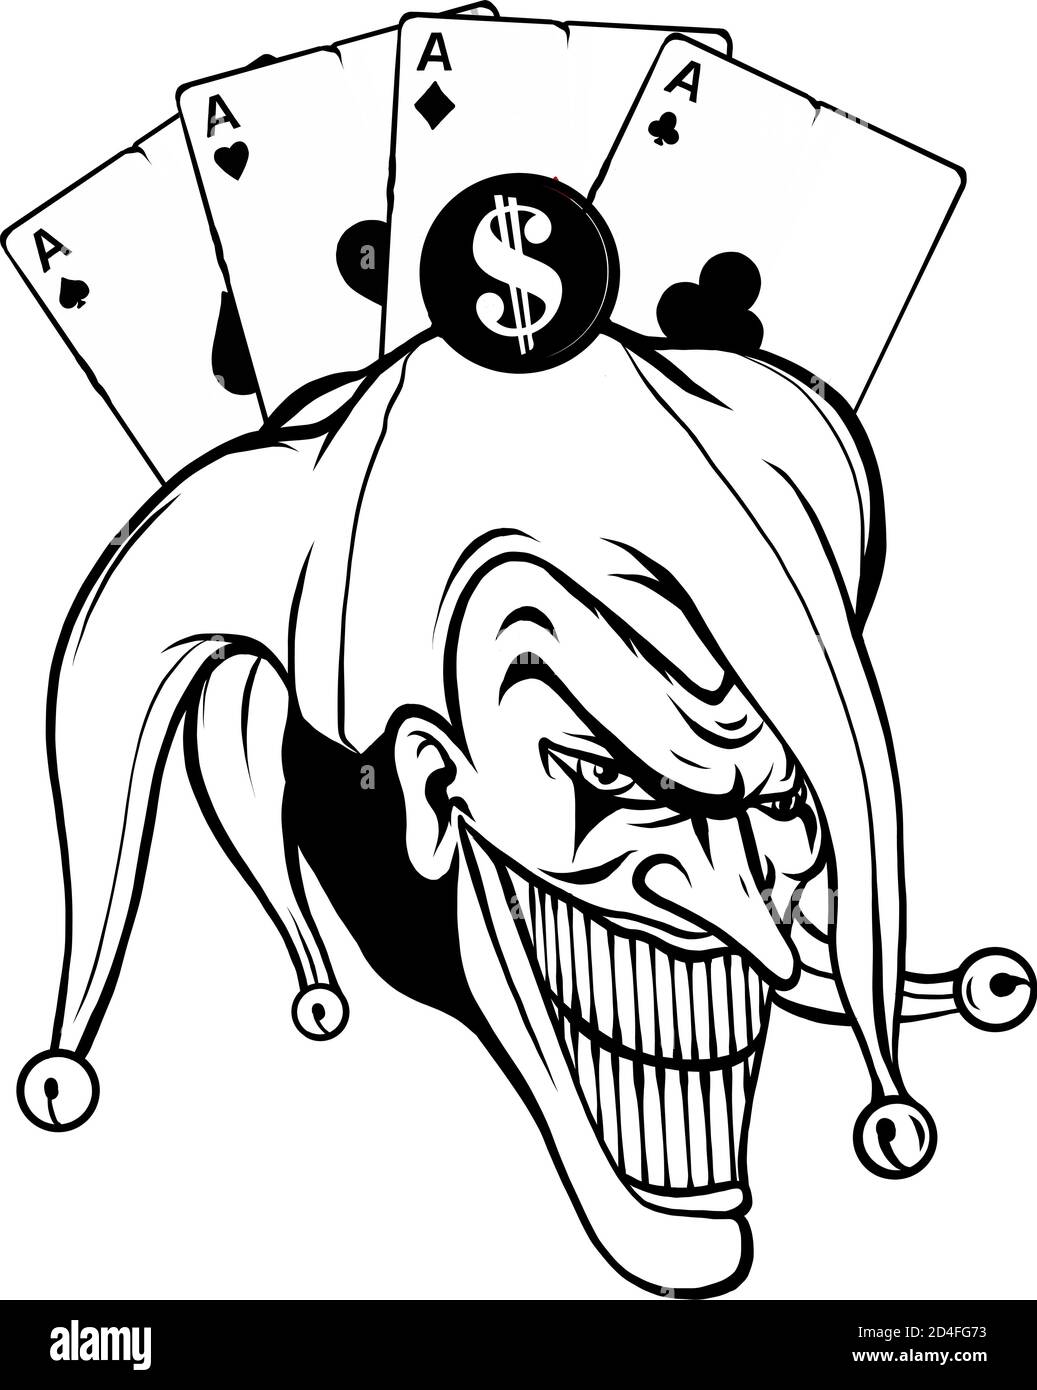 Vector fantasía ilustración de un vampiro joker zombi con un sombrero de  payaso Imagen Vector de stock - Alamy